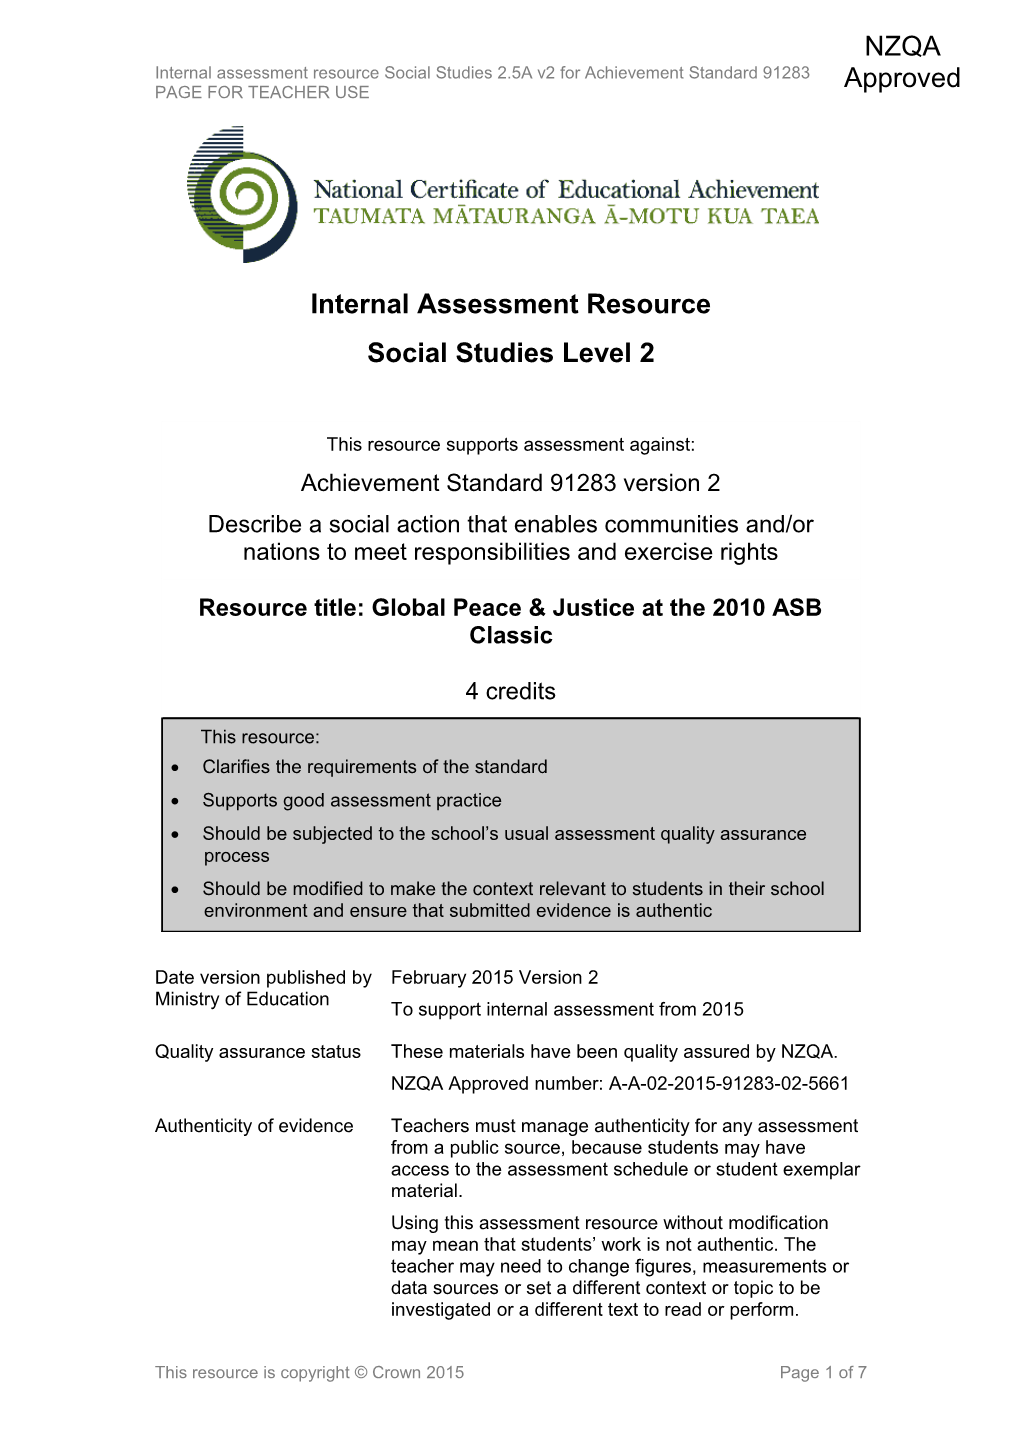 Level 2 Social Studies Internal Assessment Resources